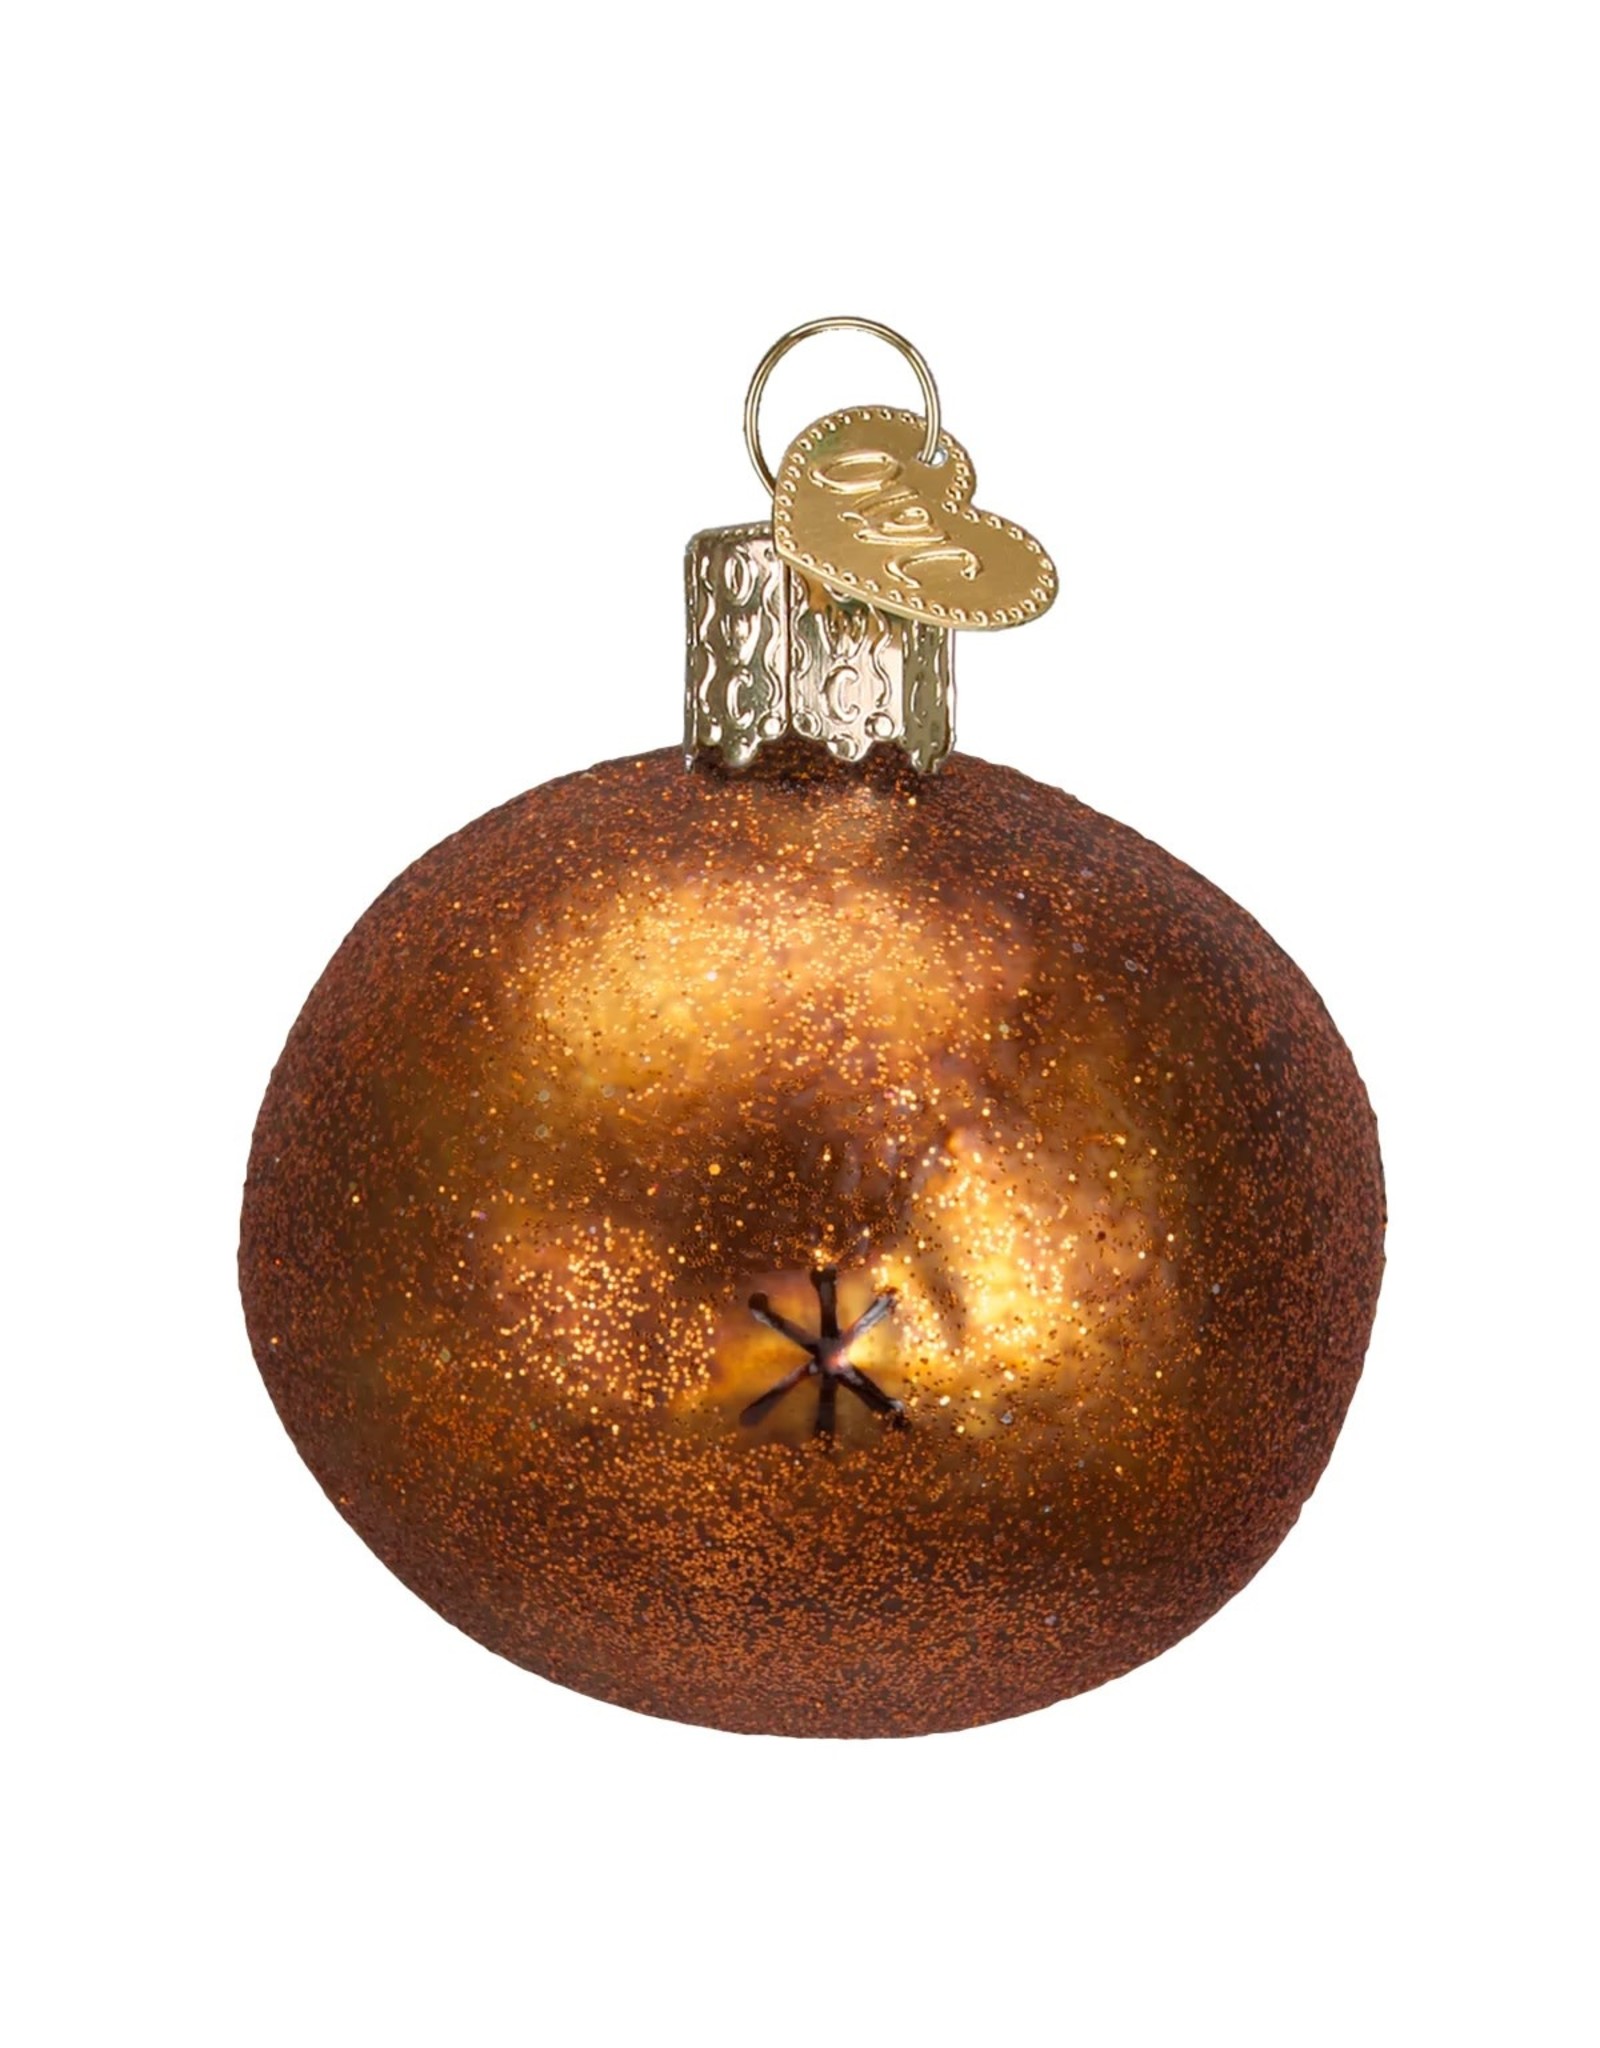 Old World Christmas Kiwi Ornament